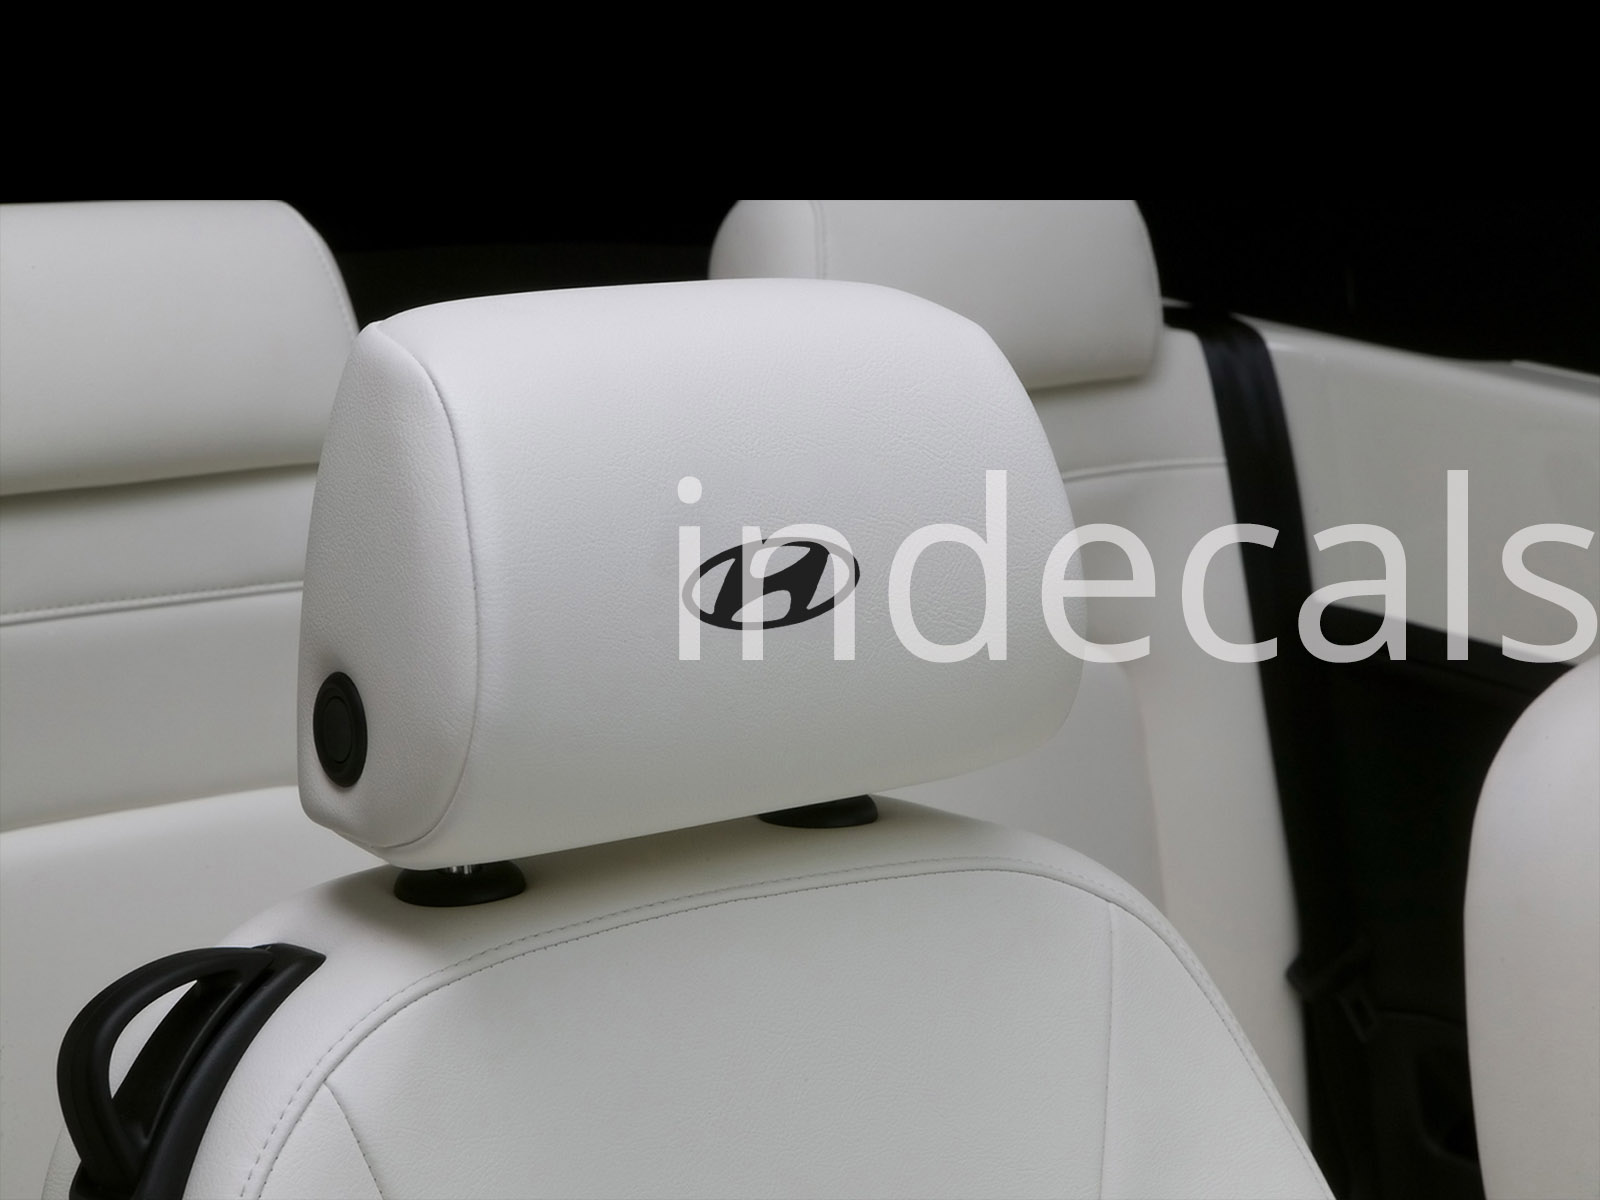 6 x Hyundai Stickers for Headrests - Black